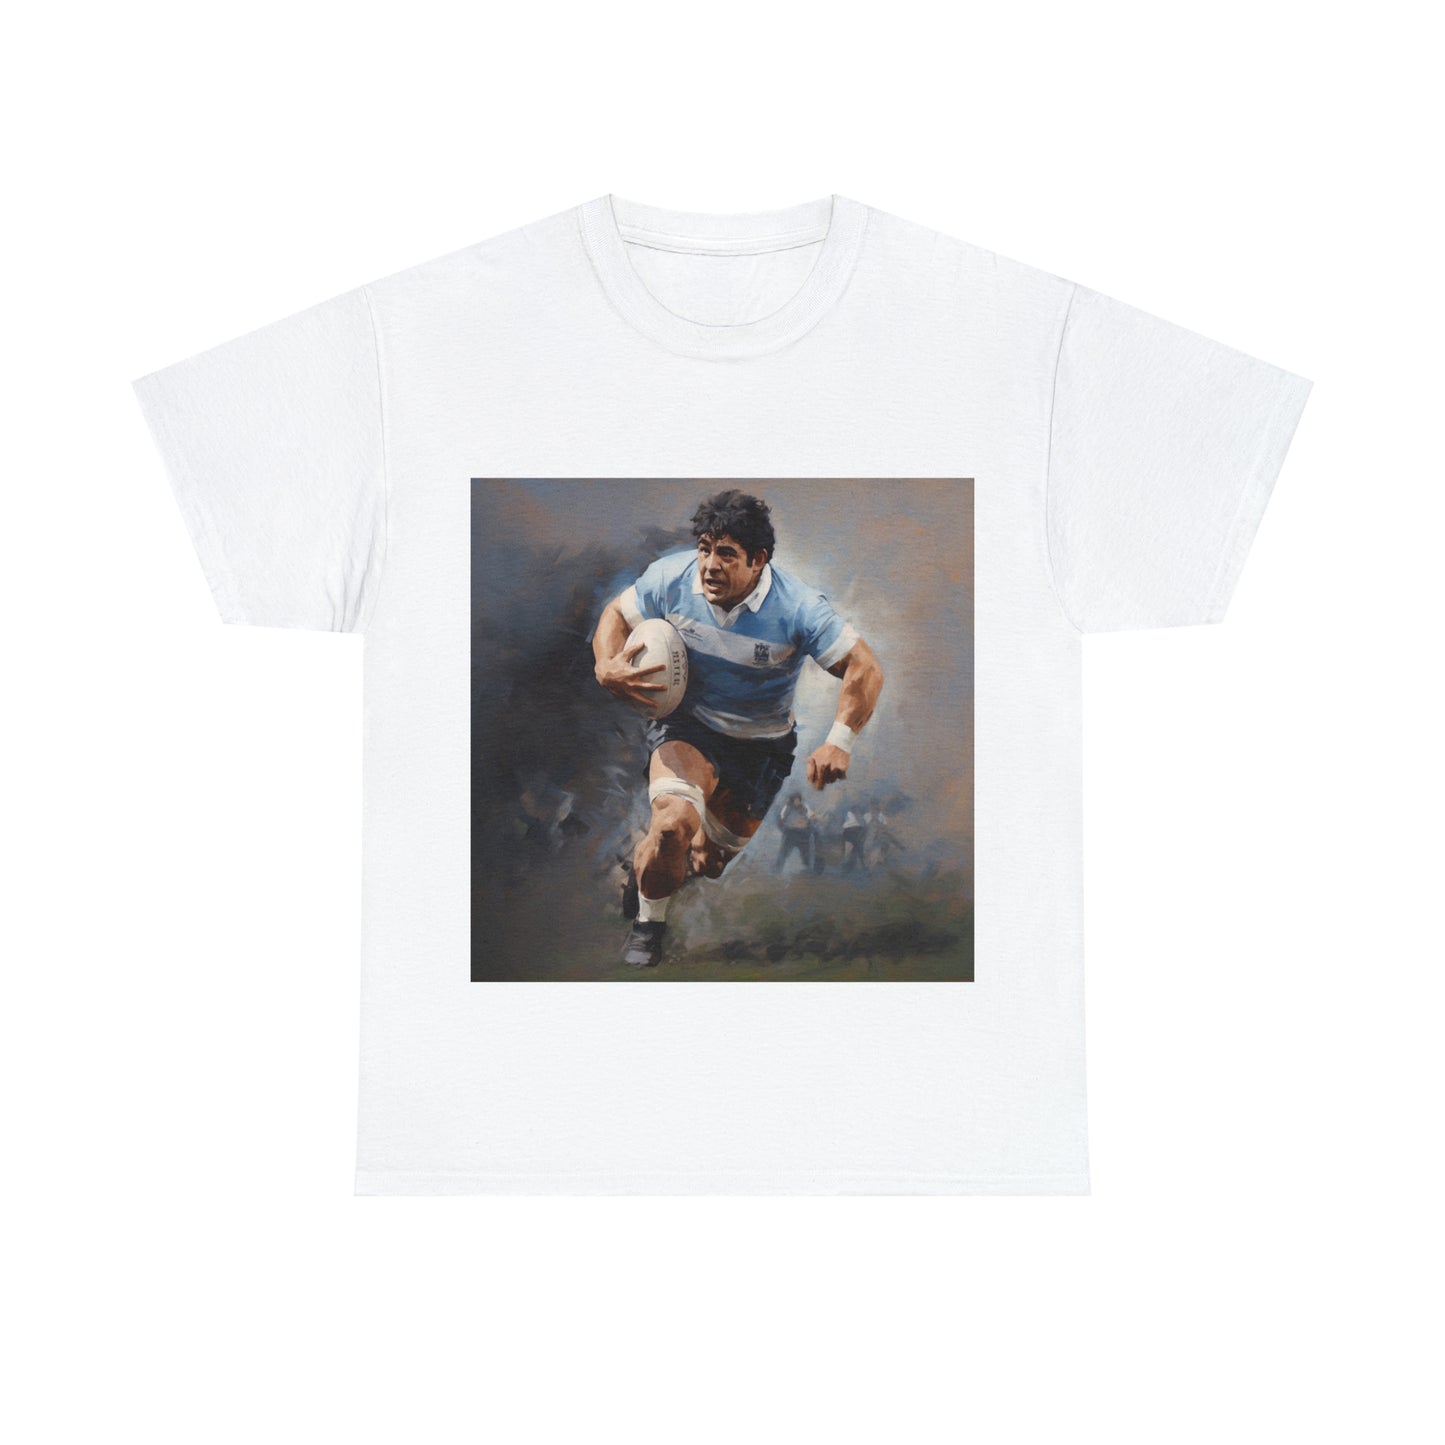 Rugby Maradona - light shirts